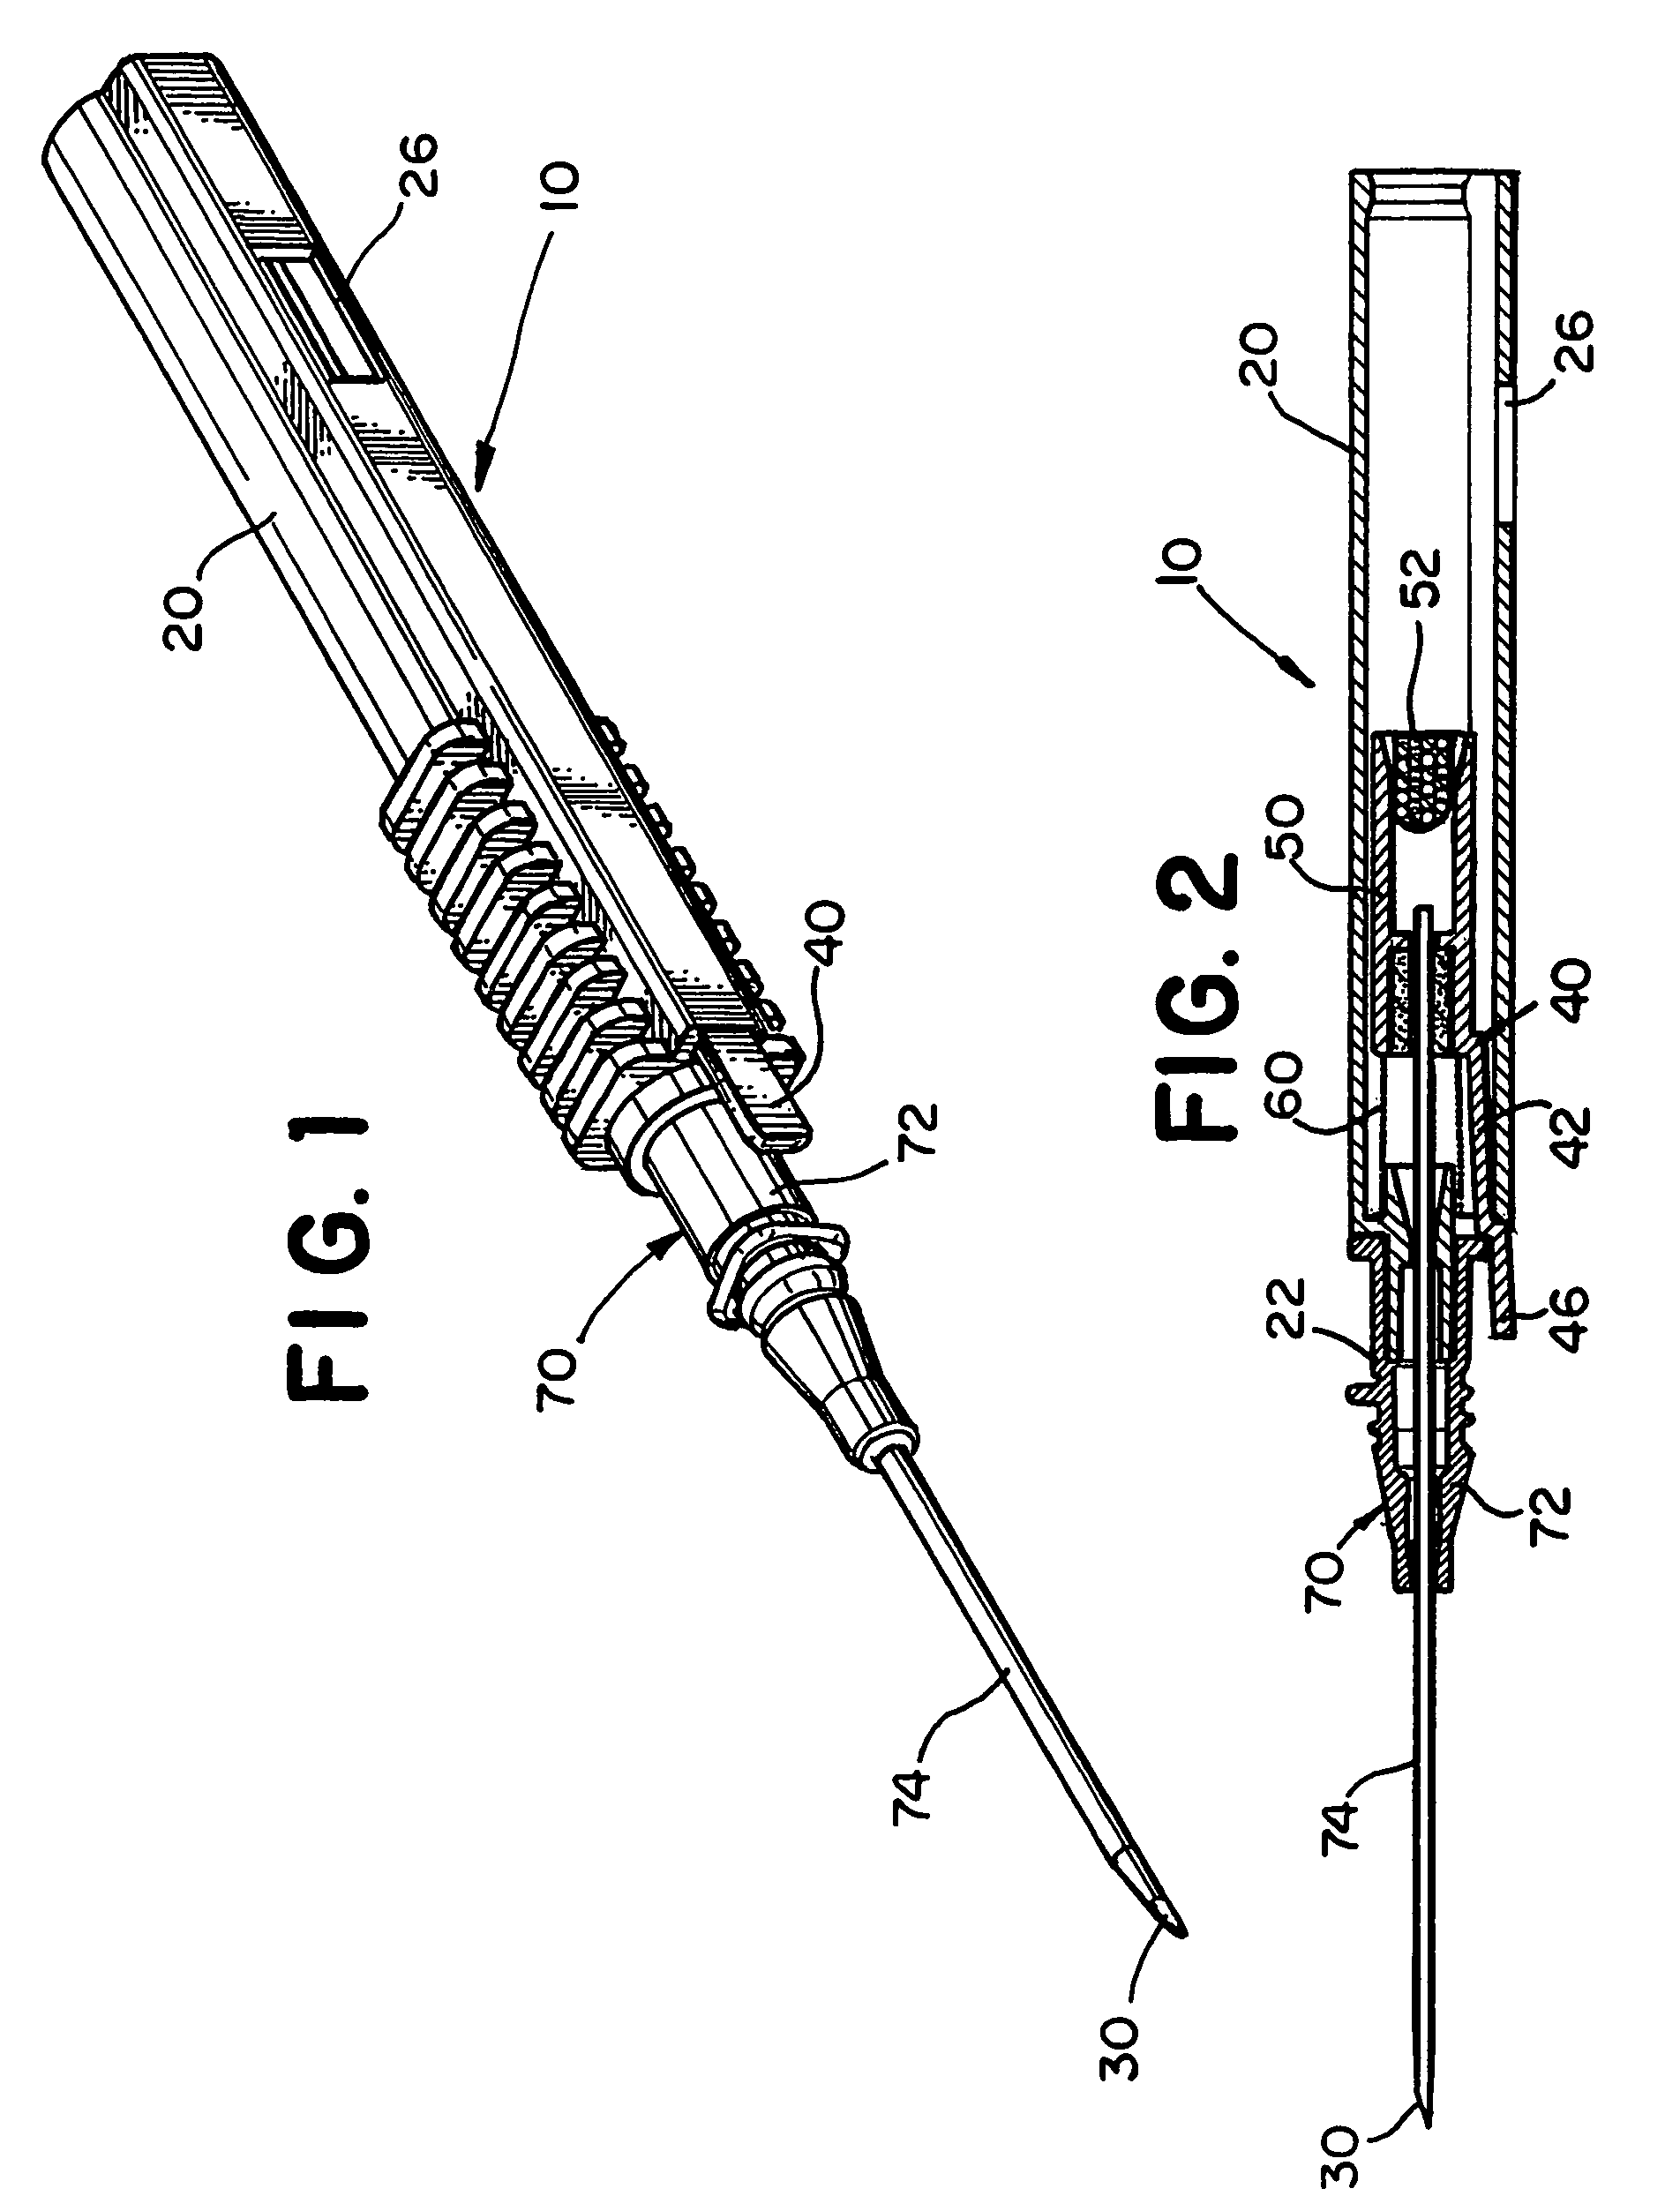 Retractable needle medical device